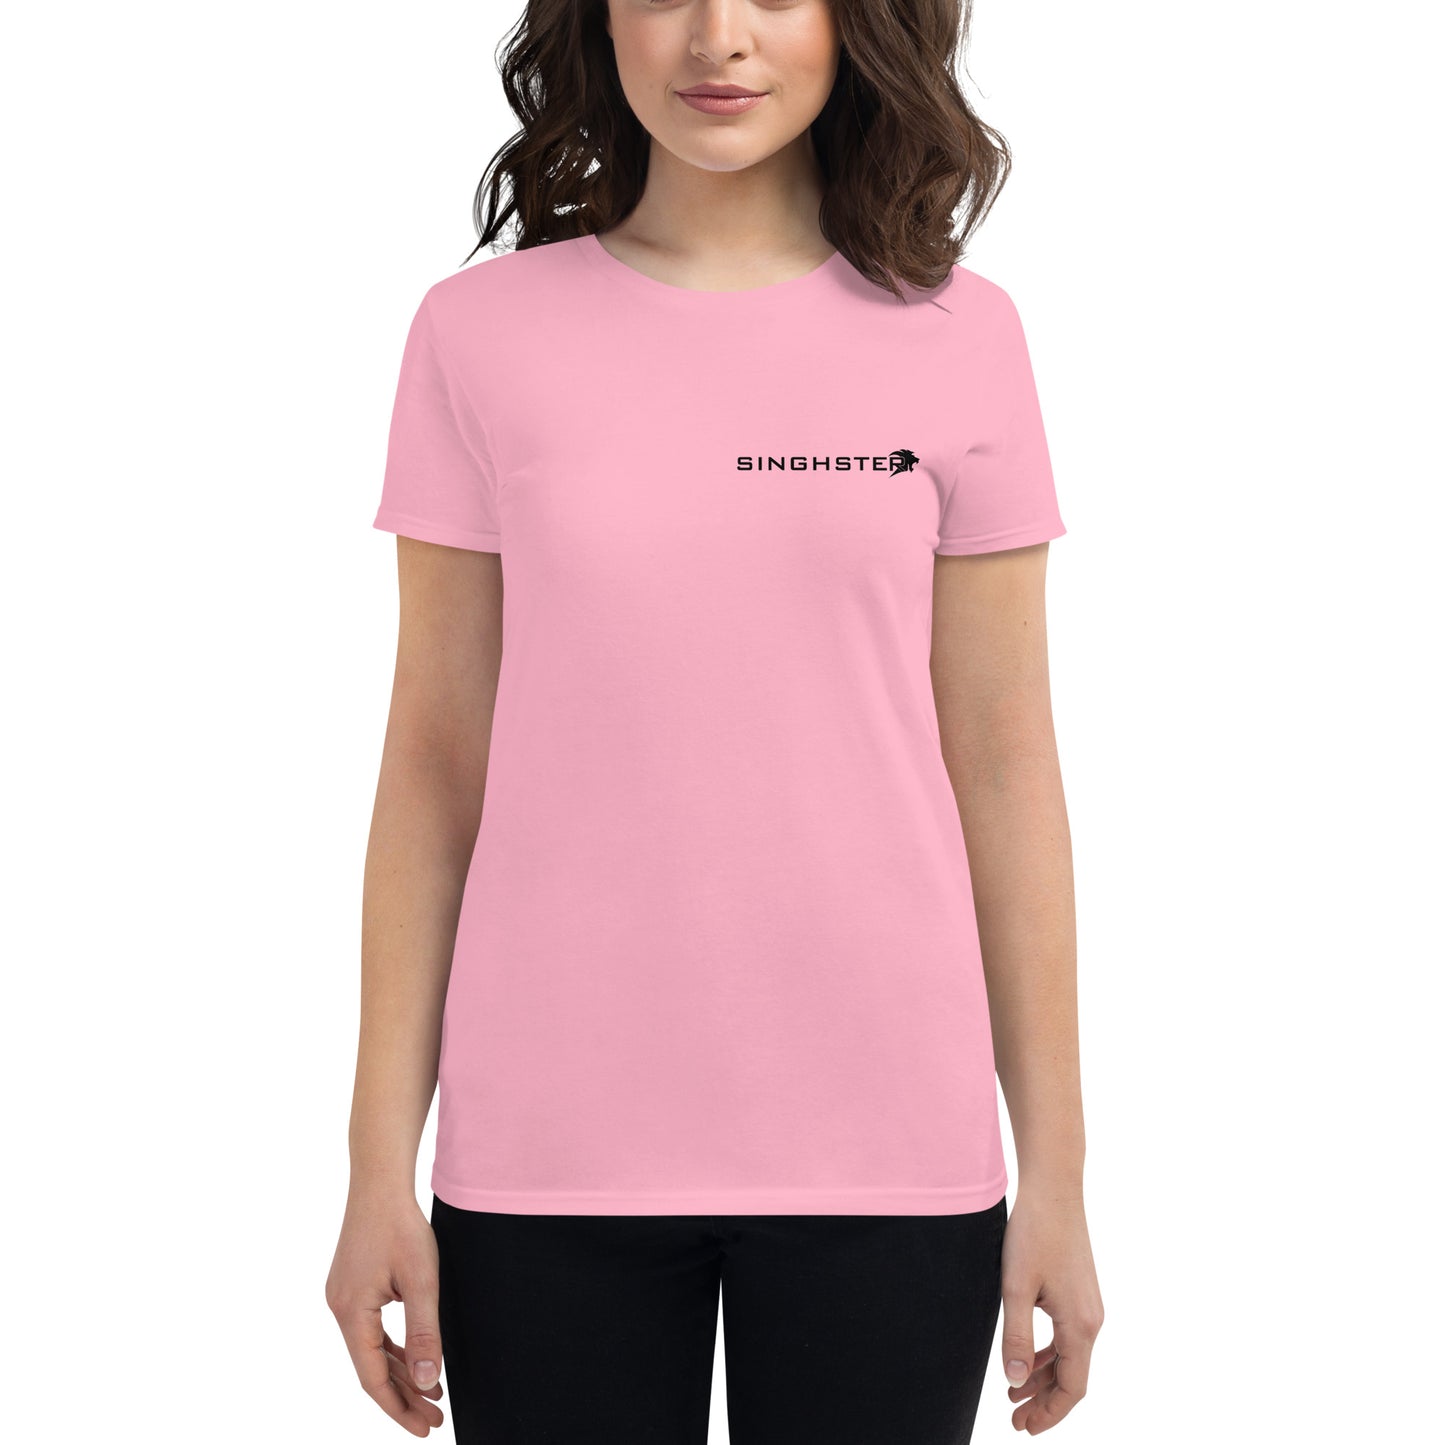 Girl Power Short Sleeve T-shirt